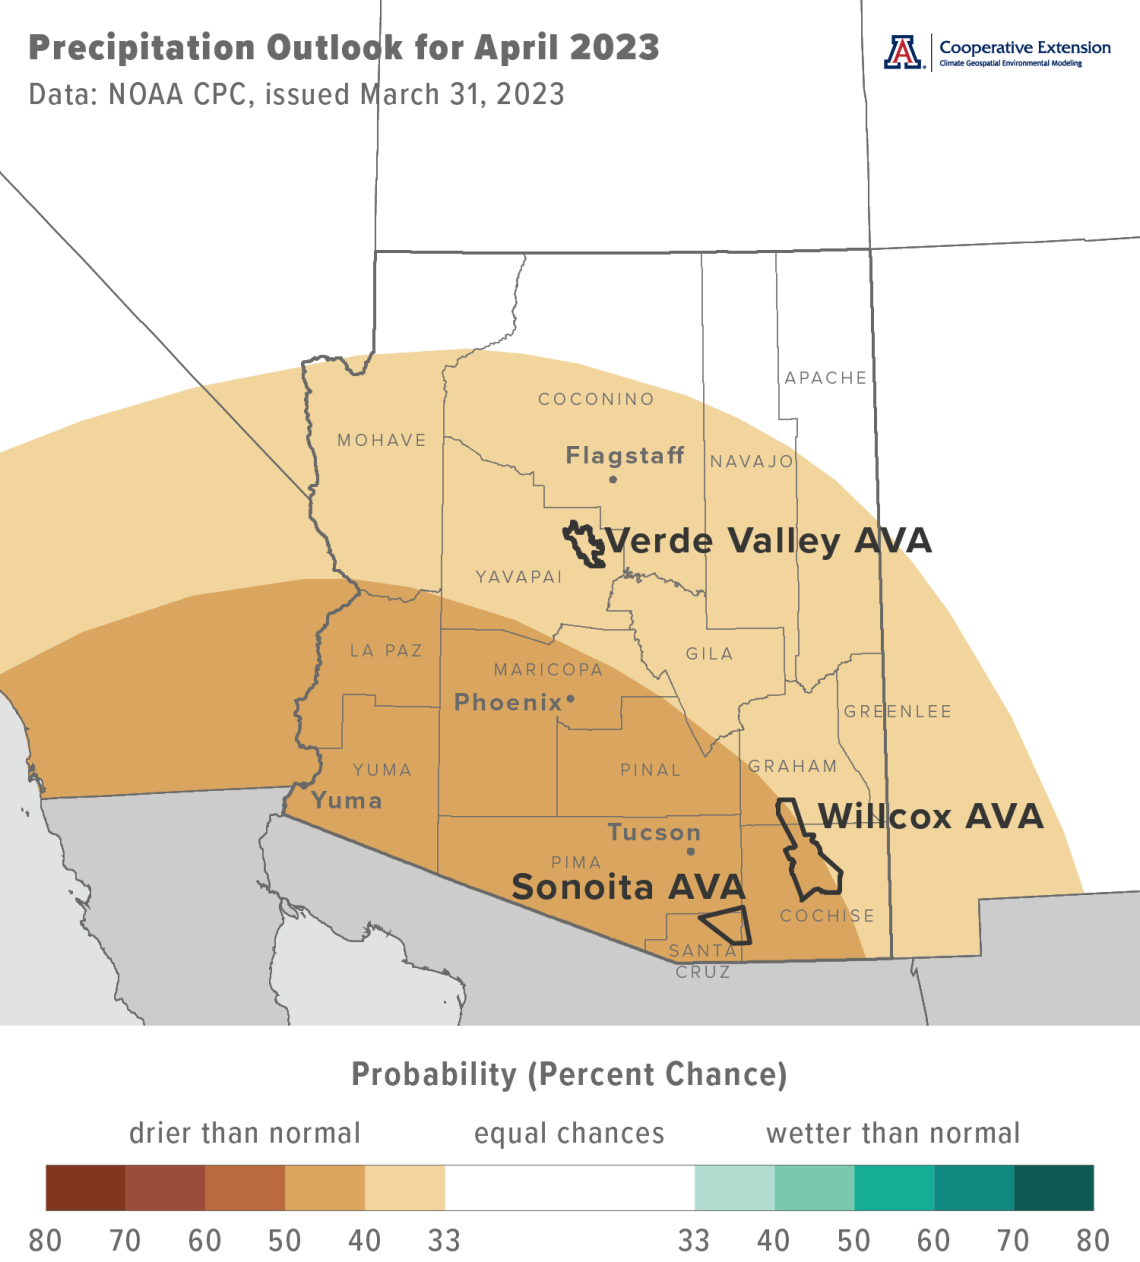 April 2023 precipitation outlook map for Arizona